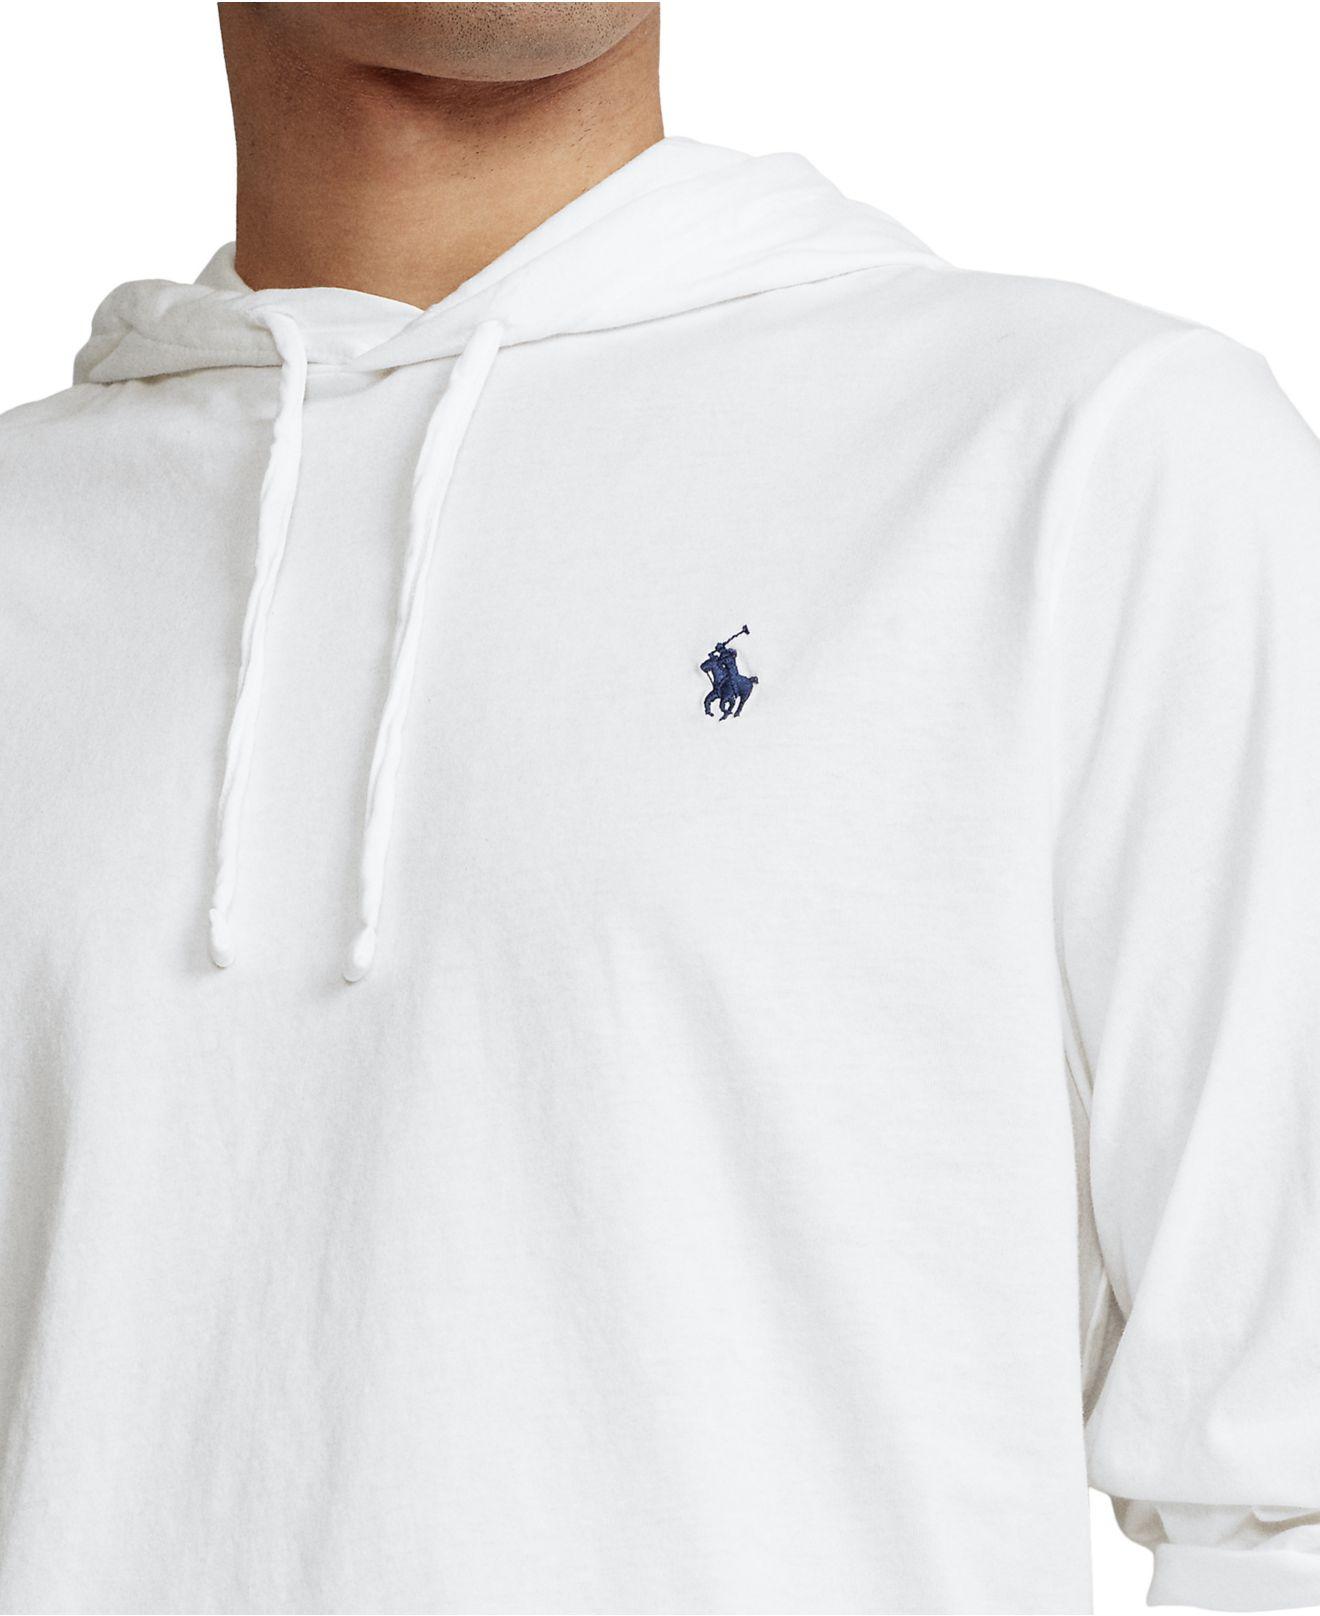 Polo Ralph Lauren Cotton Men's Jersey T-shirt Hoodie in White/Navy (White)  for Men - Lyst